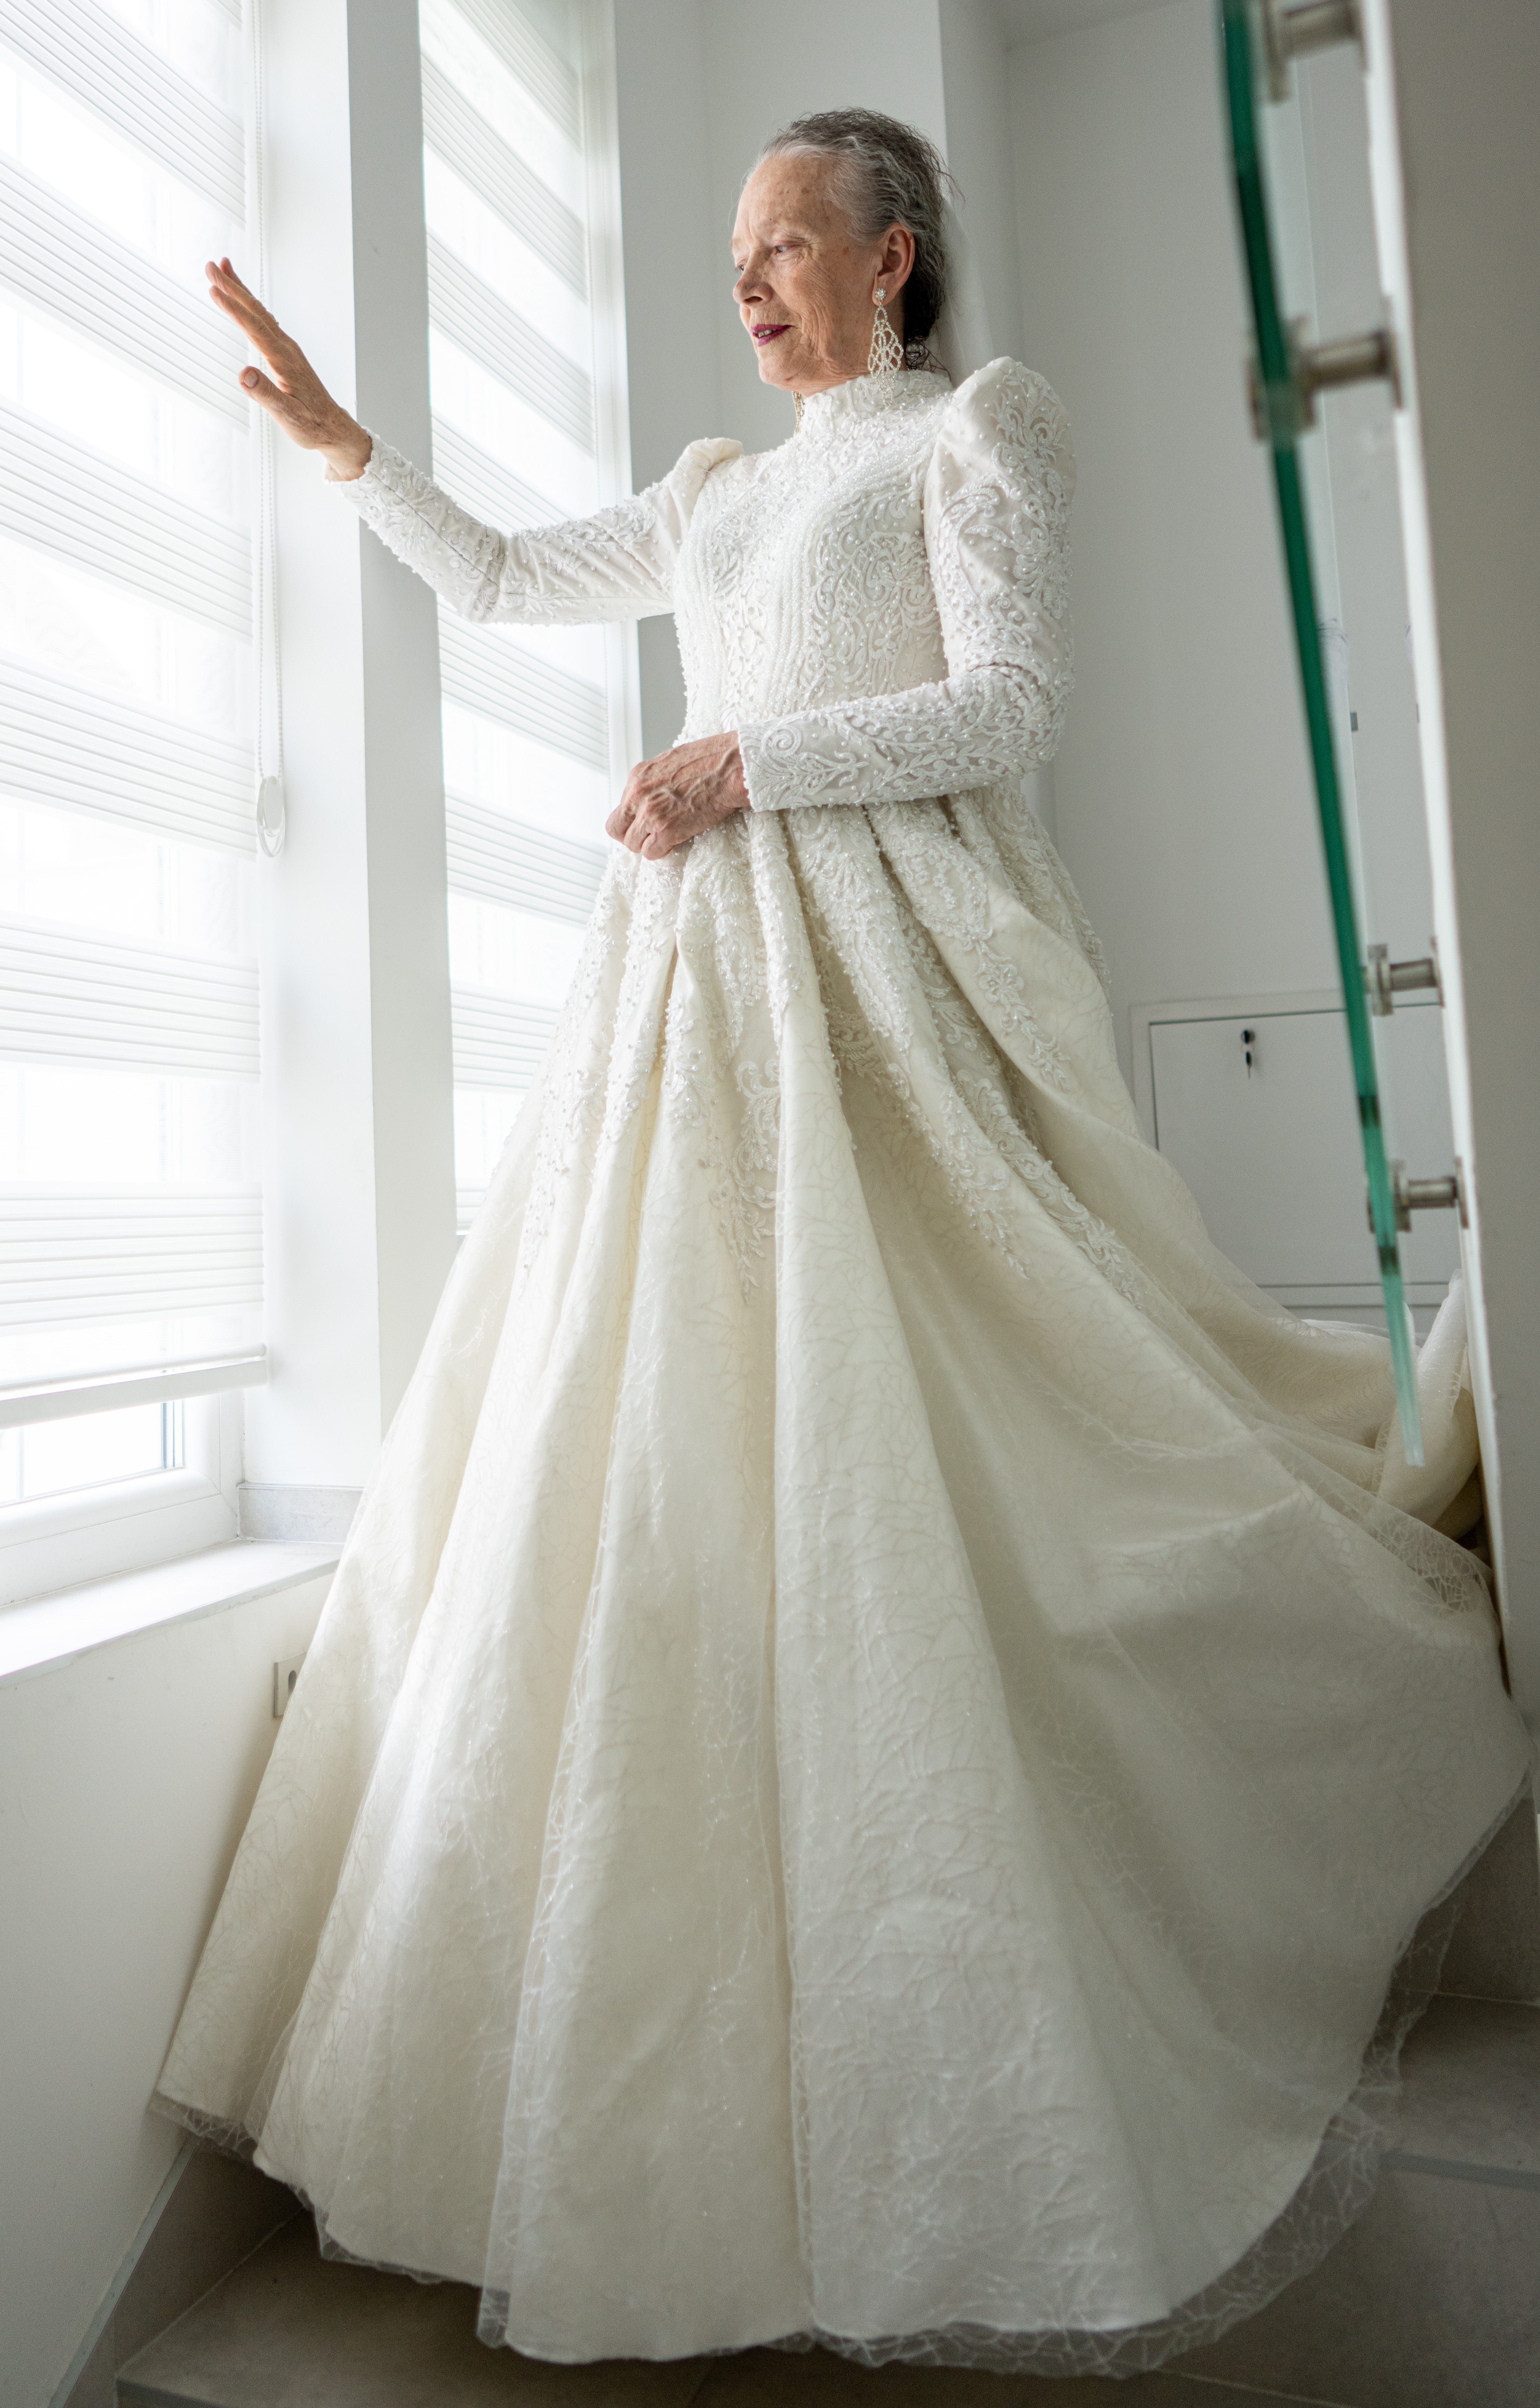 MIL vestida de novia | Foto: Getty Images